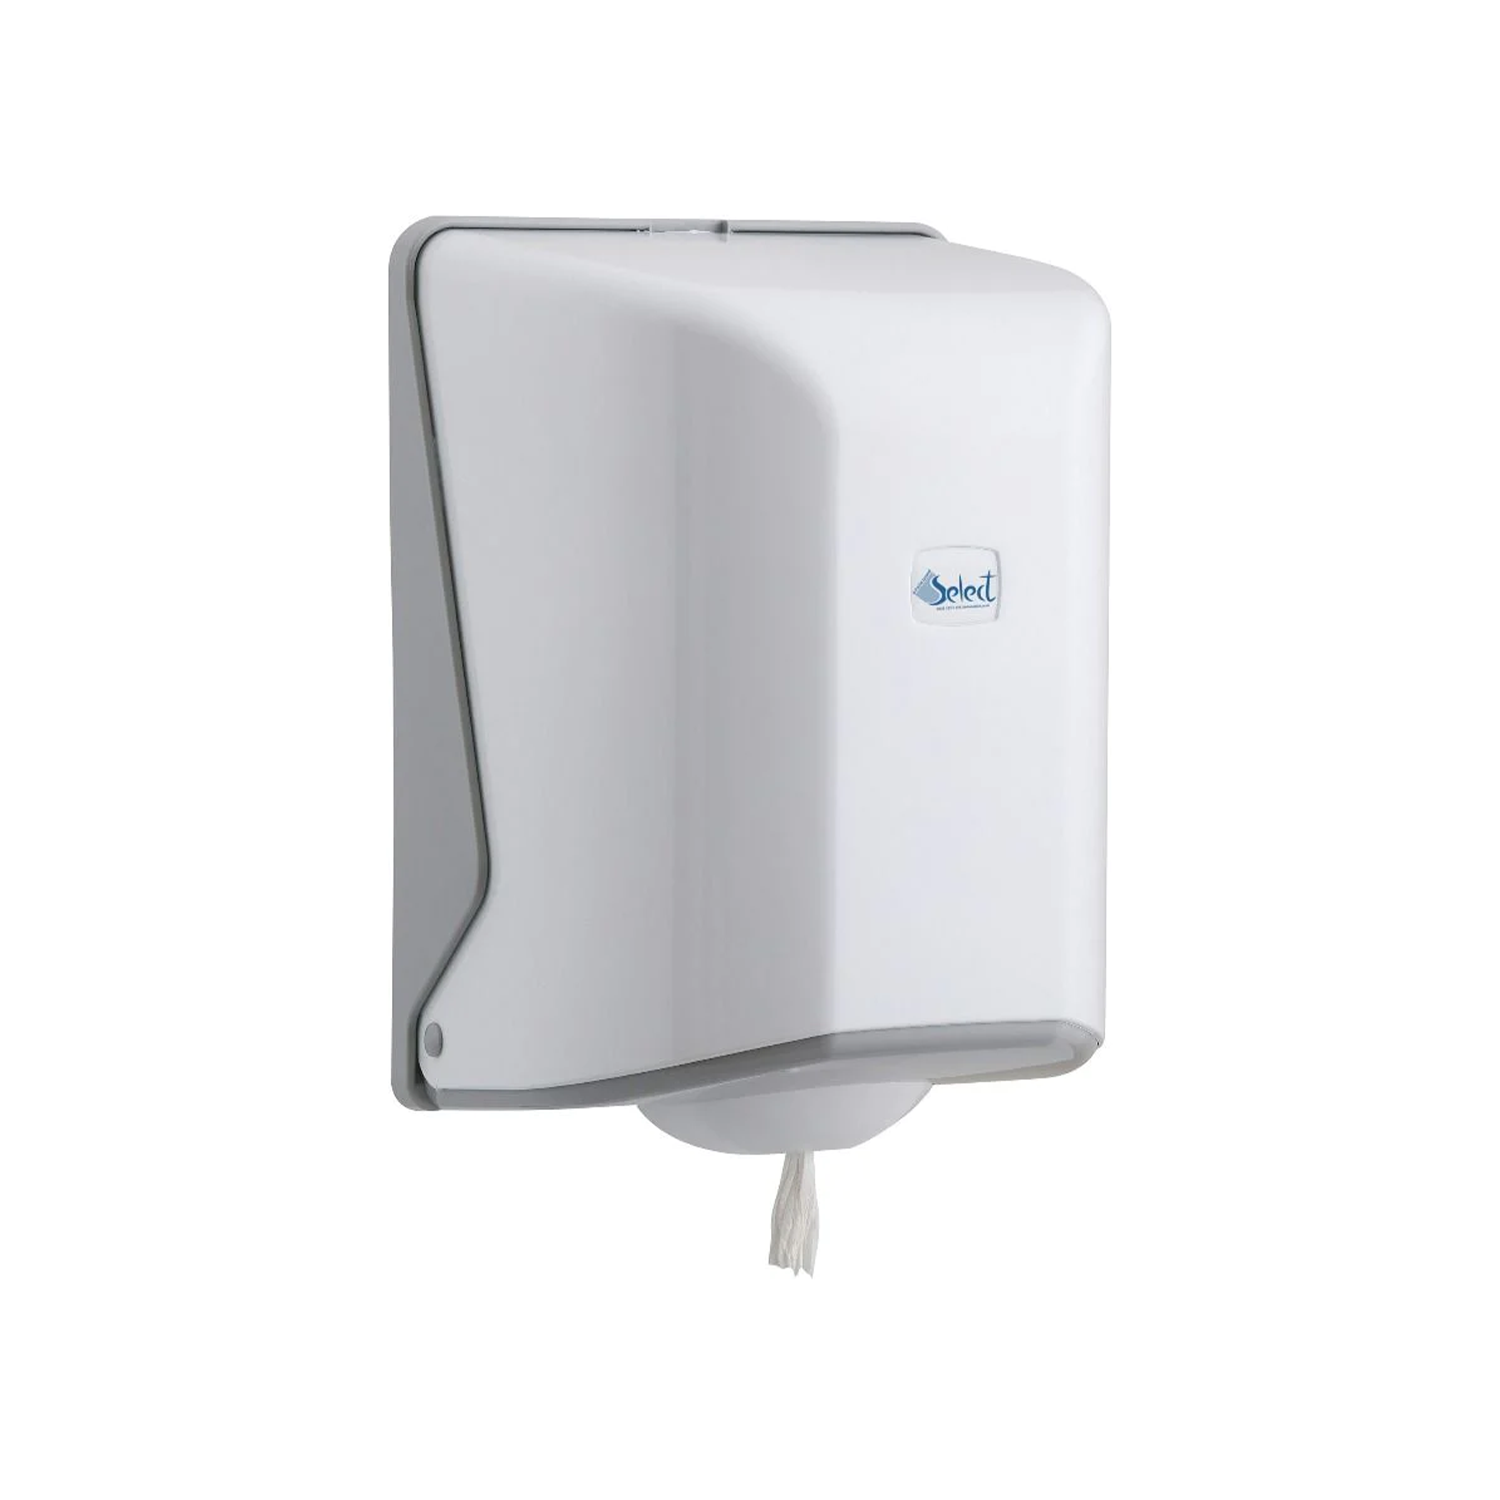 Select Centrefeed Wiper Paper Towel Dispenser | White